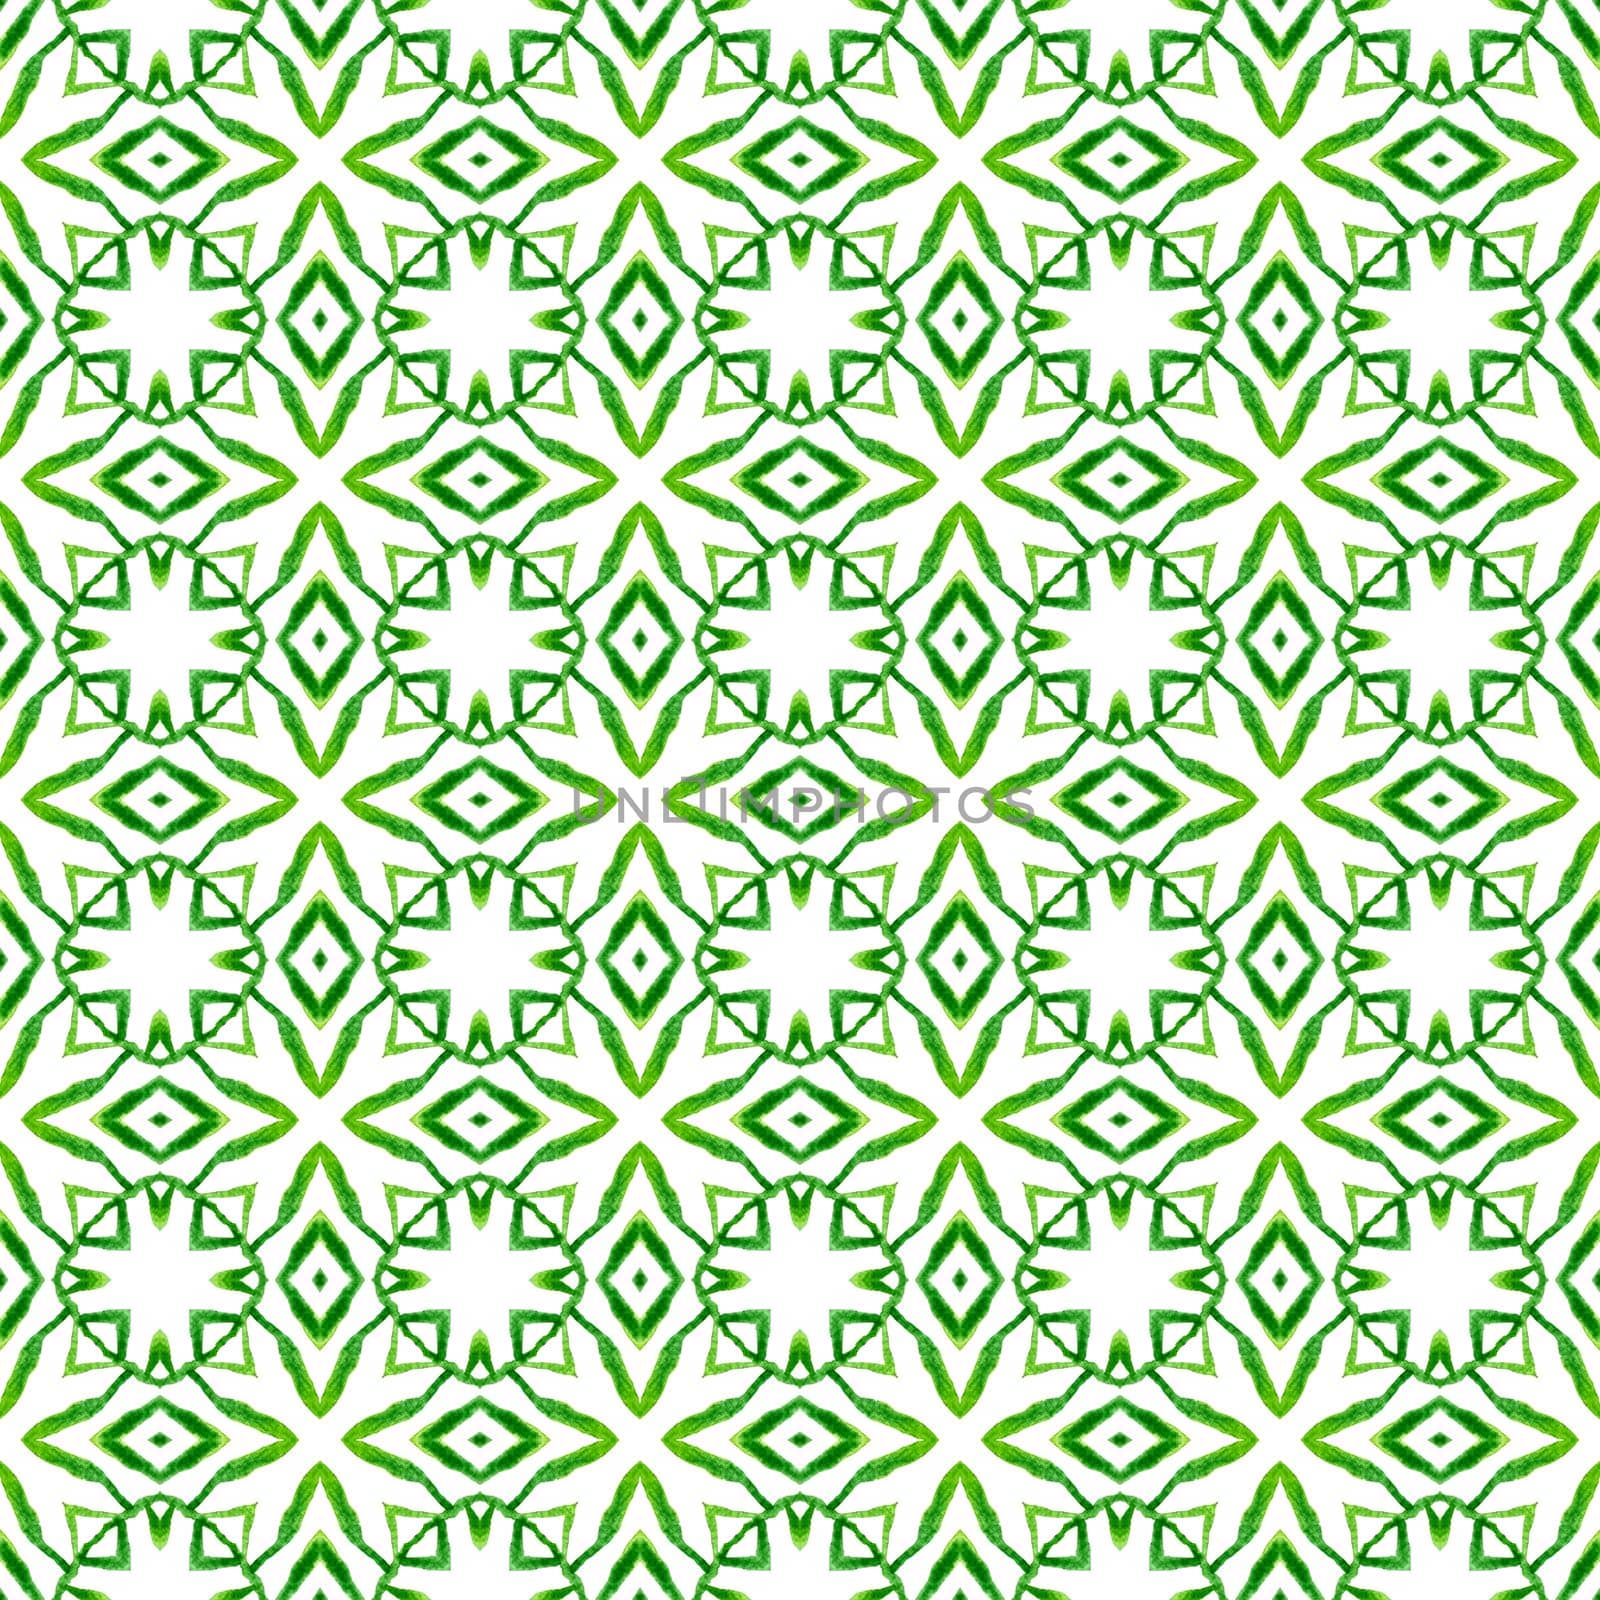 Chevron watercolor pattern. Green emotional boho chic summer design. Textile ready extraordinary print, swimwear fabric, wallpaper, wrapping. Green geometric chevron watercolor border.